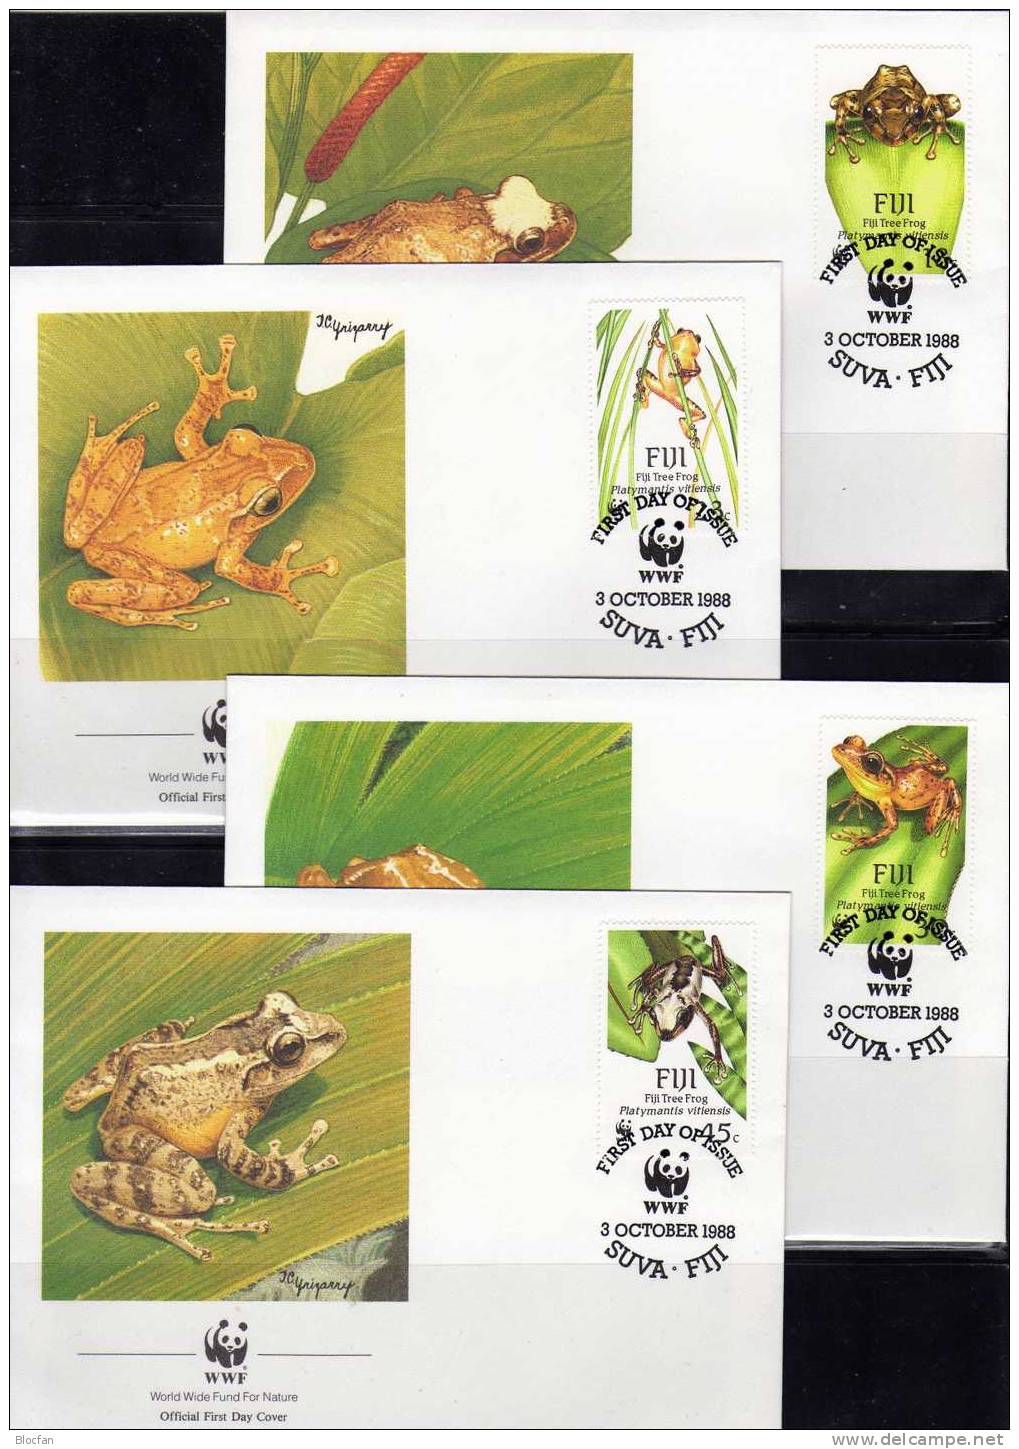 WWF-Set 72 Fidschi Insel 586/9 **, 4FDC plus 4MKt. 45€CHF Baum-Frosch mit Dokumentation 1988 from Fiji Islands Oceanien